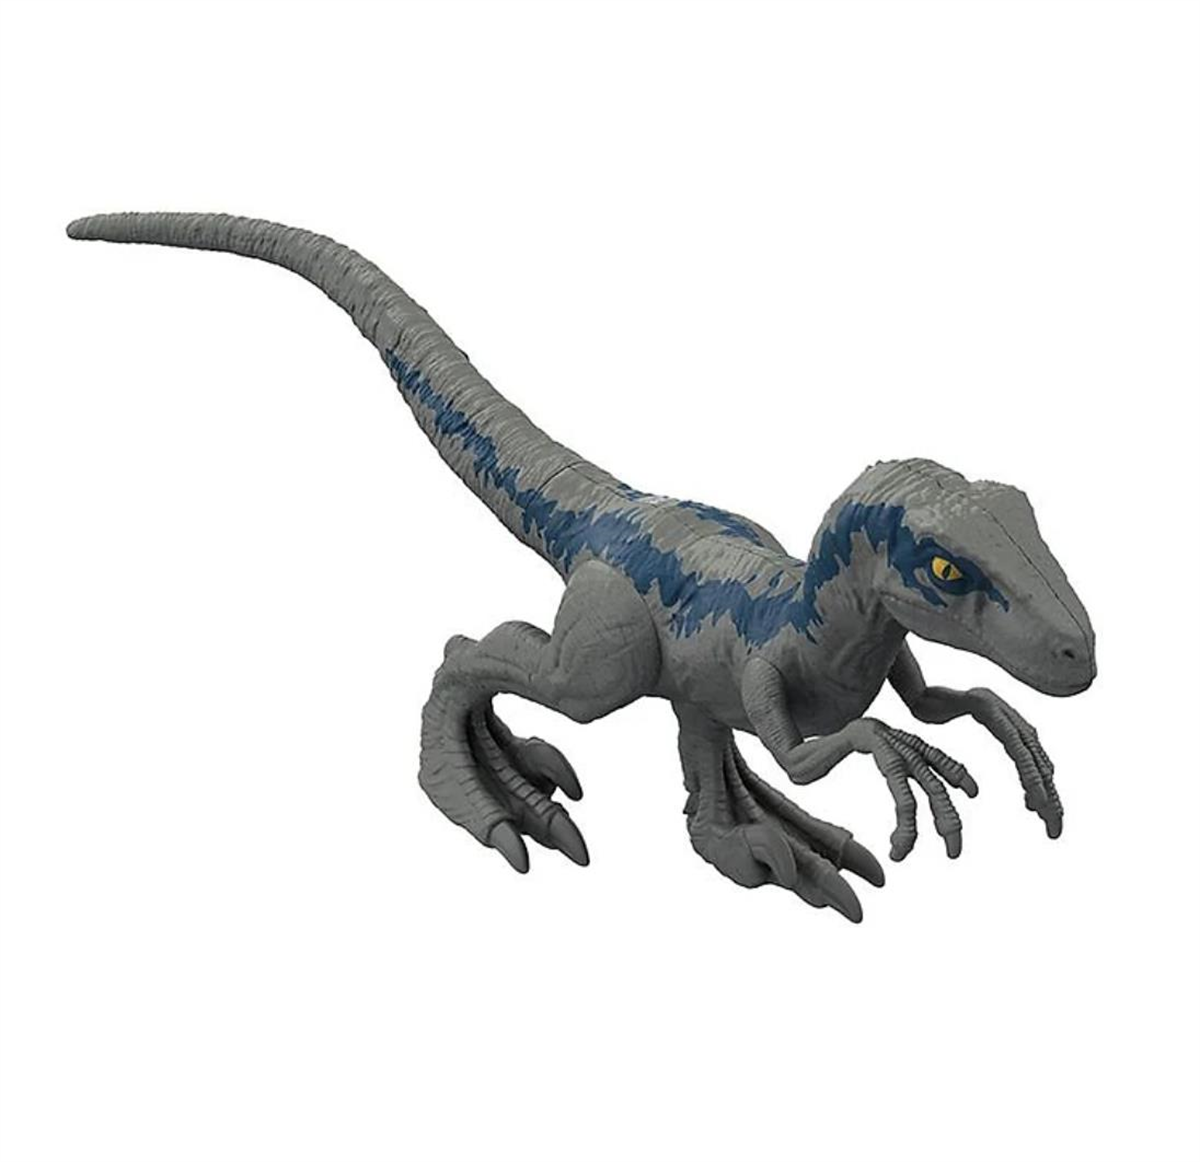 Jurassic World 6' Dinozor Figürü GWT49-HMK81 | Toysall